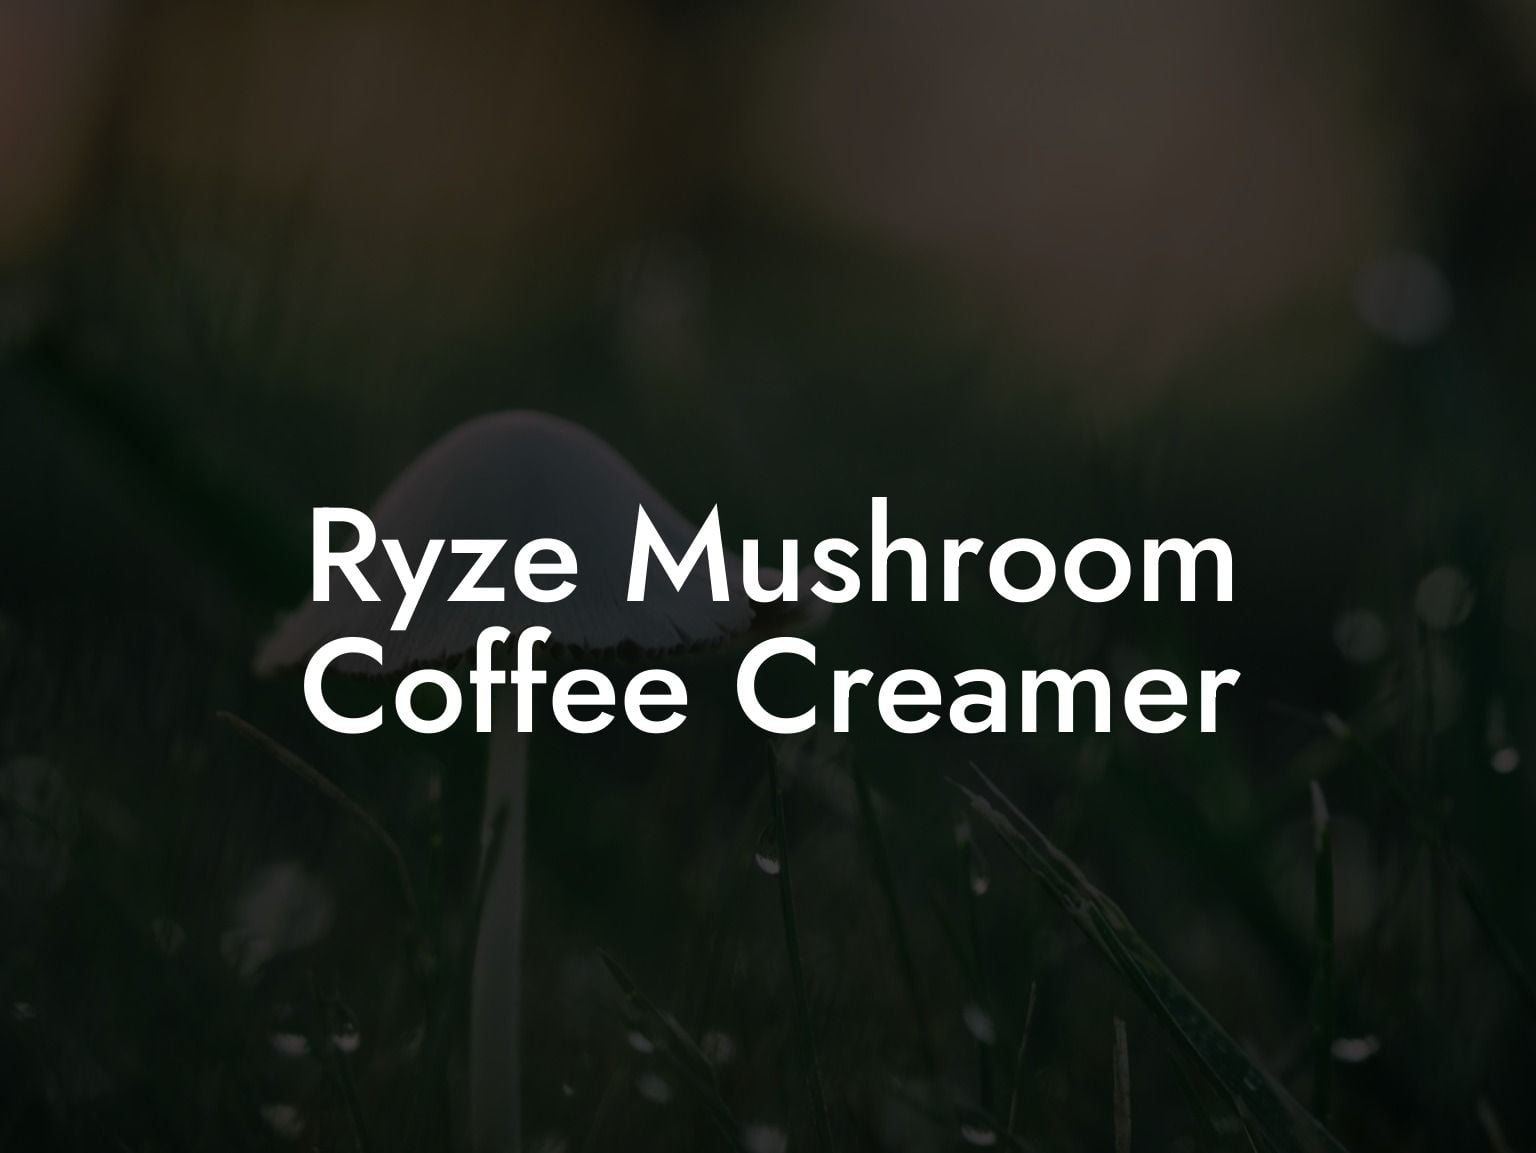 Ryze Mushroom Coffee Creamer